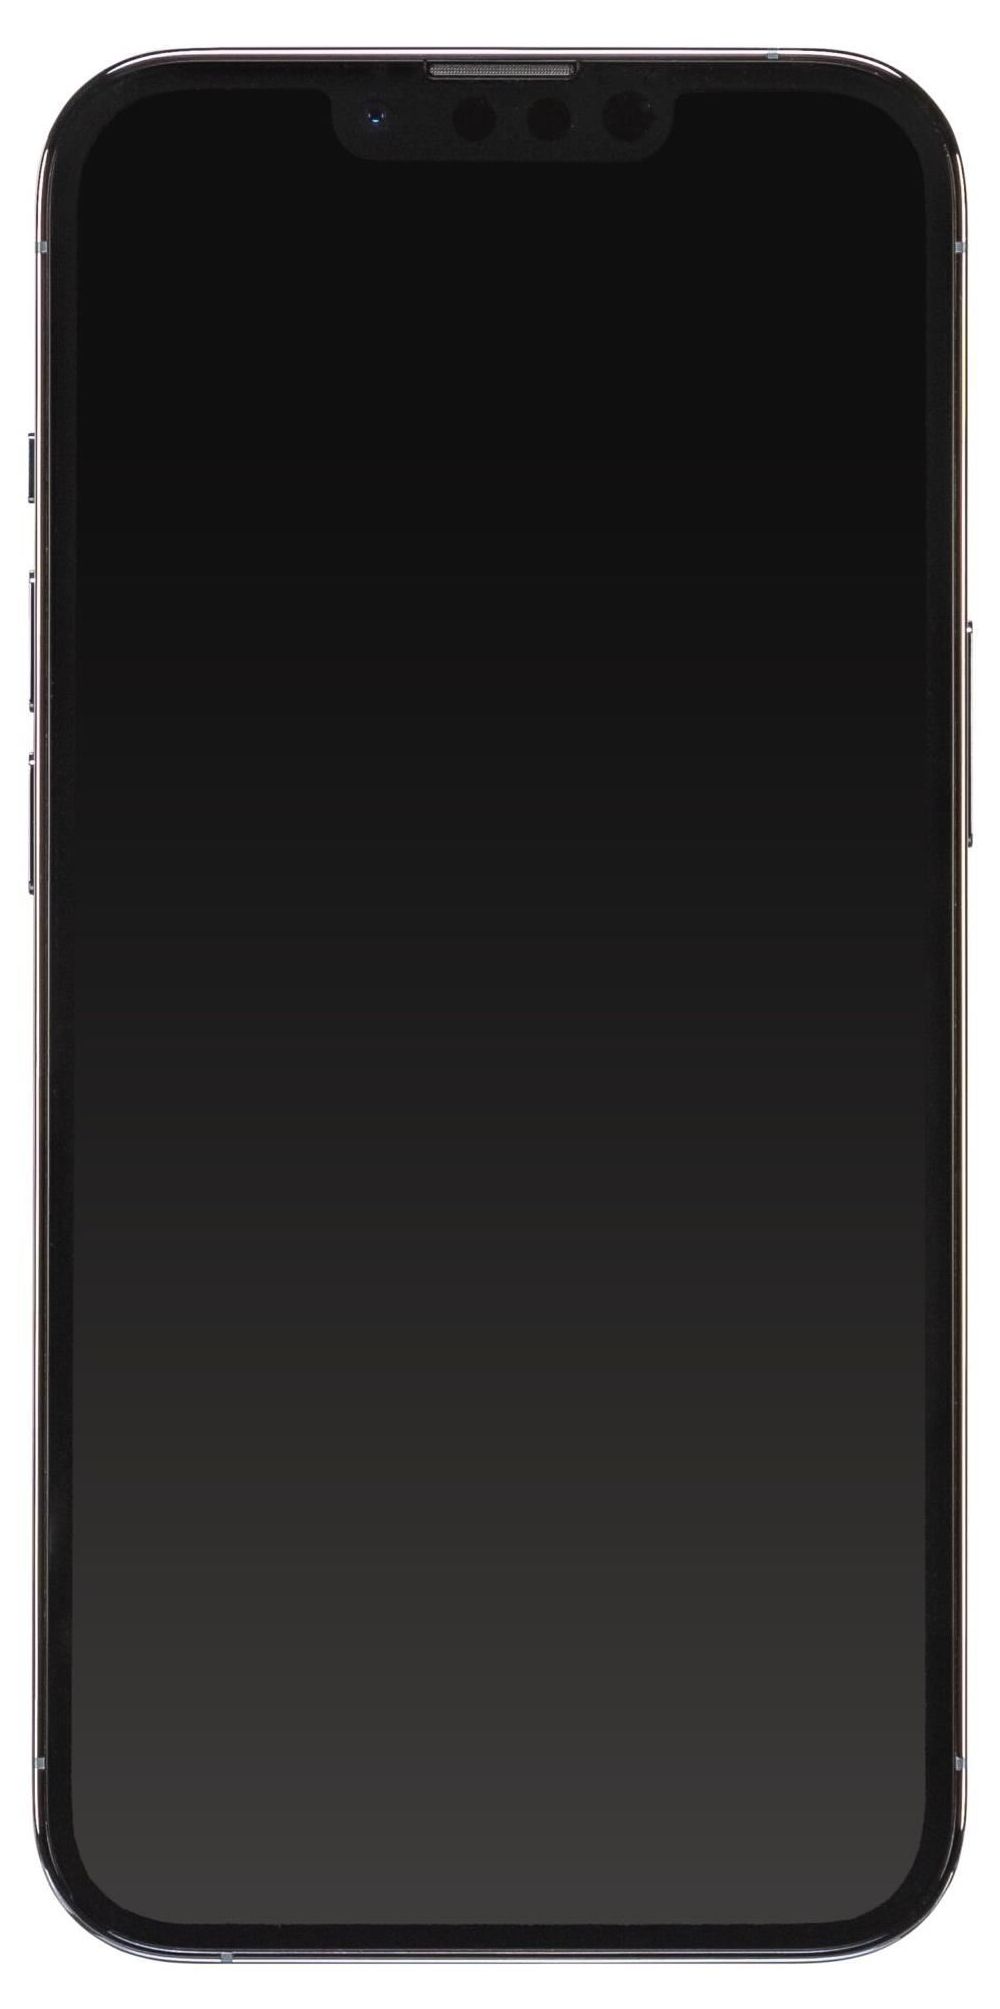 Apple iPhone 13 Pro - Smartphone - Dual-SIM - 5G NR - 512GB - 6.1 - 2532 x 1170 Pixel (460 ppi (Pixel pro )) - Super Retina XDR Display with ProMotion - Triple-Kamera 12 MP Frontkamera - Gold (MLVQ3ZD/A)